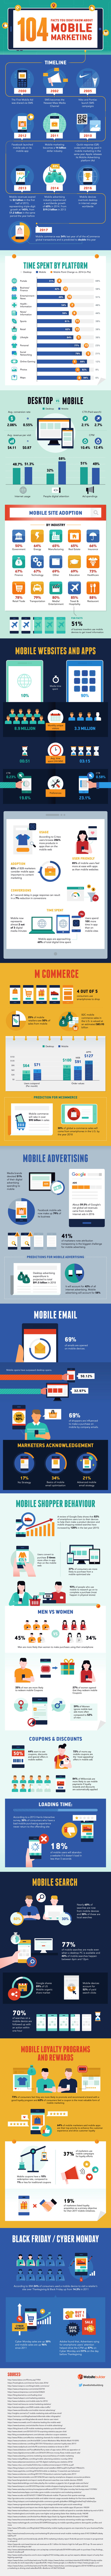 Mobile Marketing Statistics Infographic